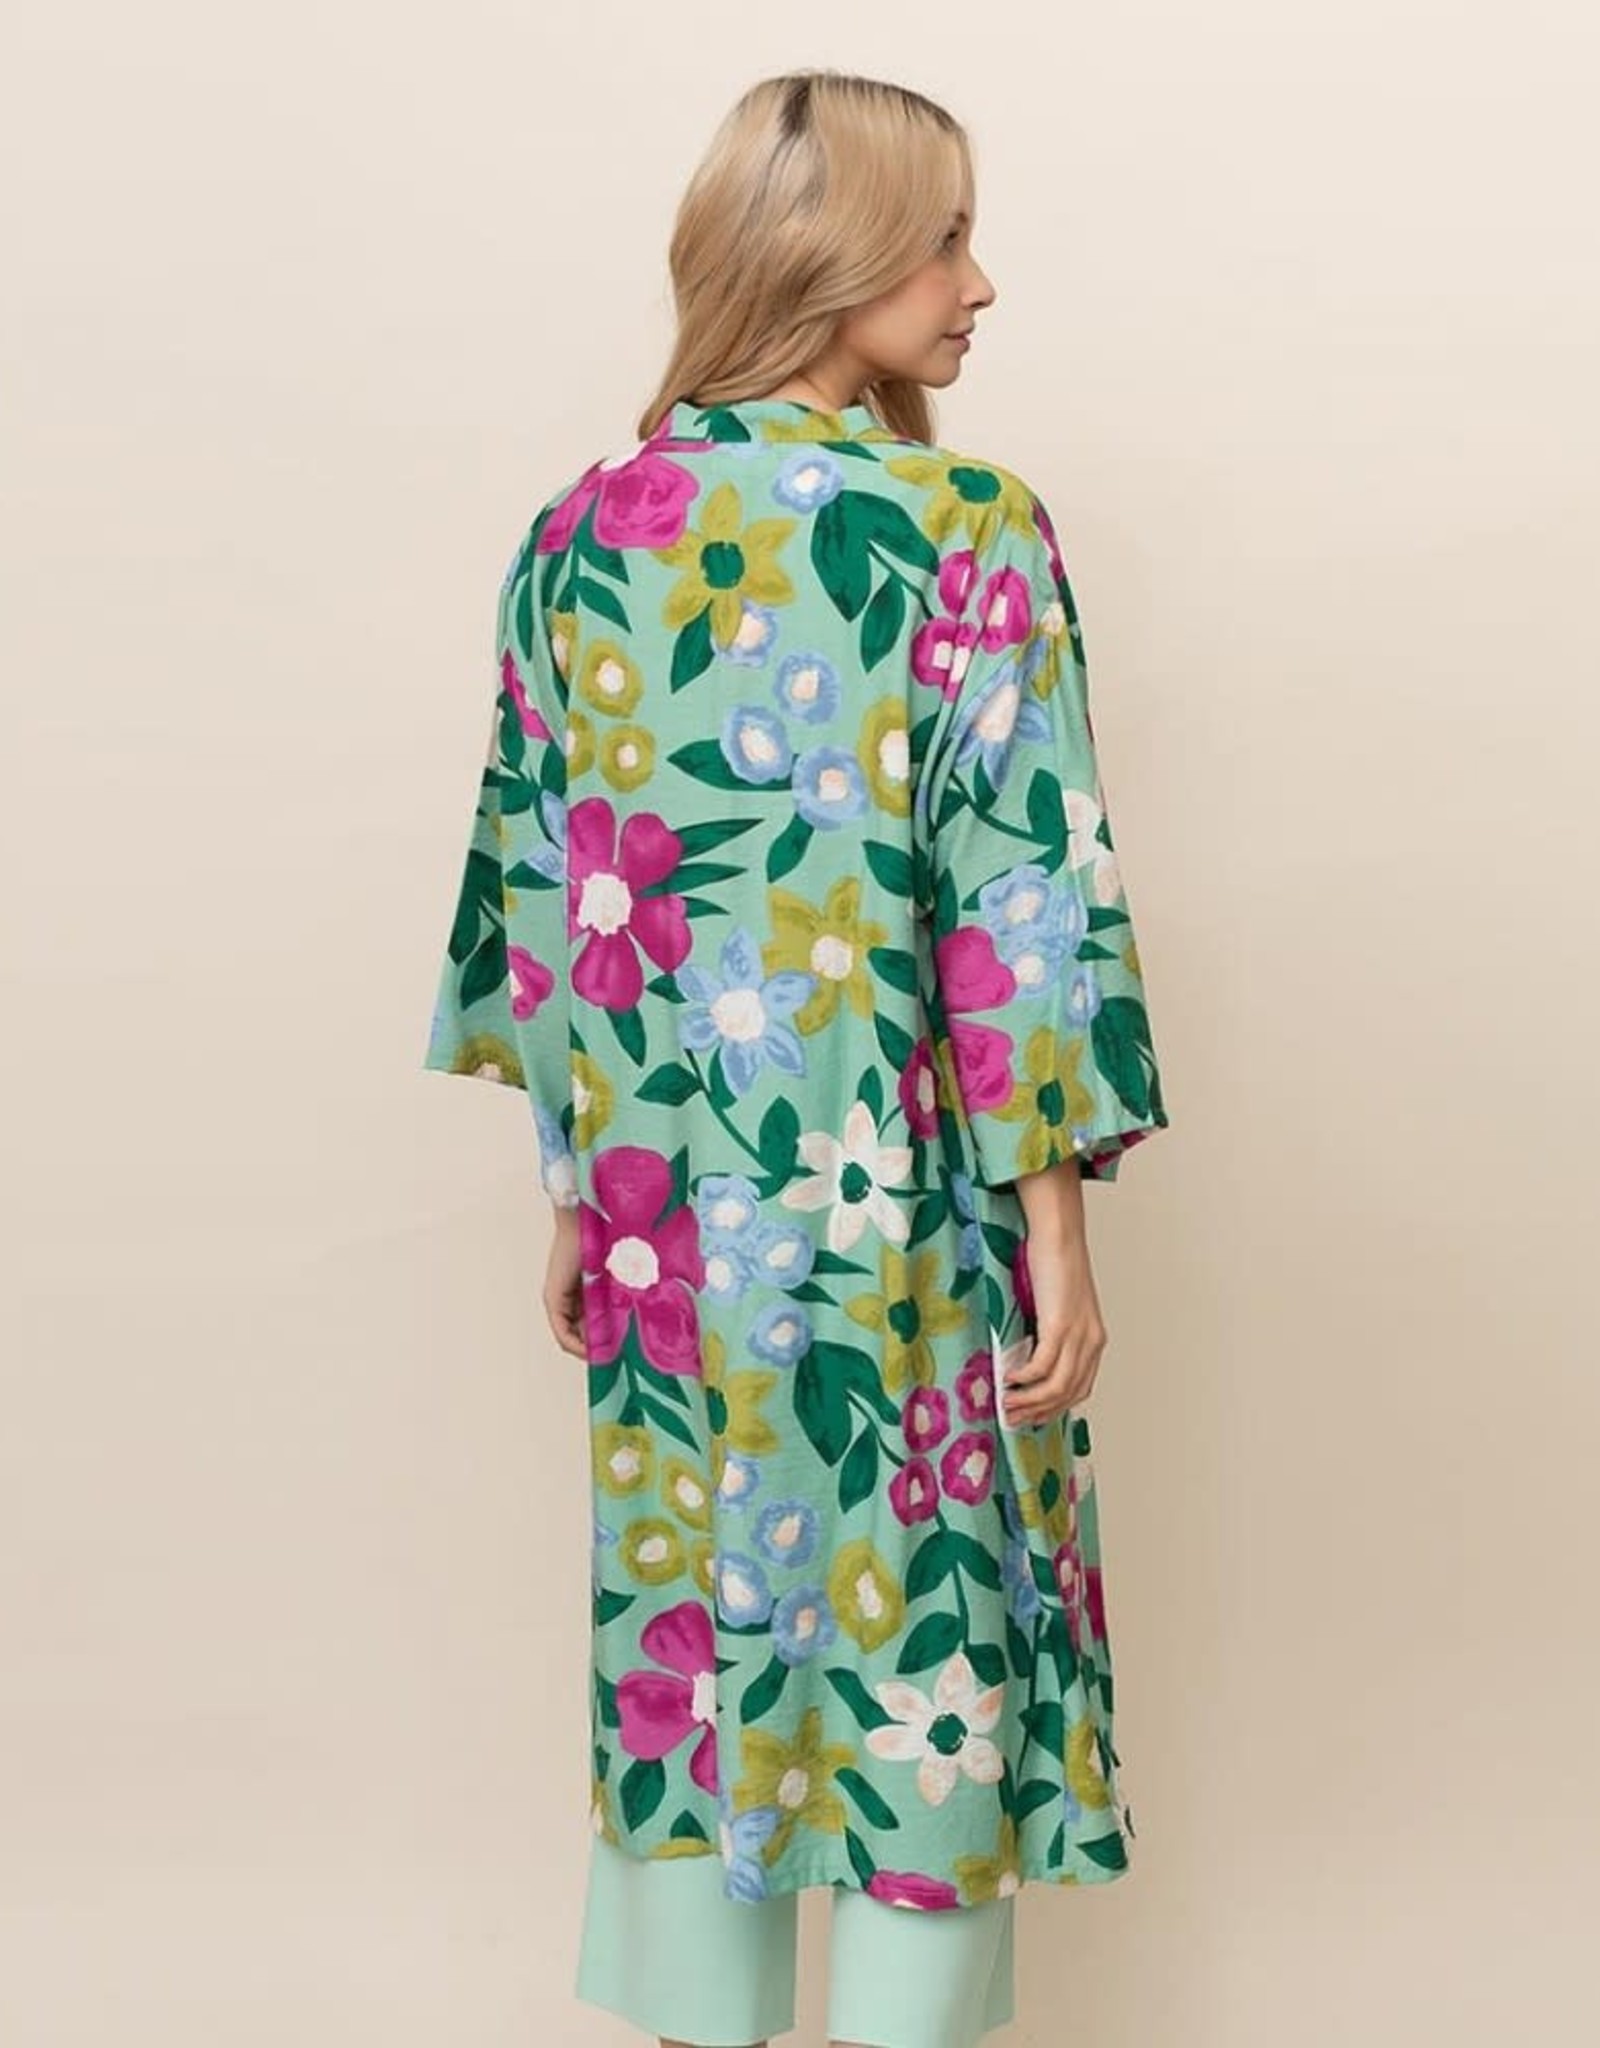 judson 7309807 - Lightweight Long Floral Print Kimono  - O/S - Teal